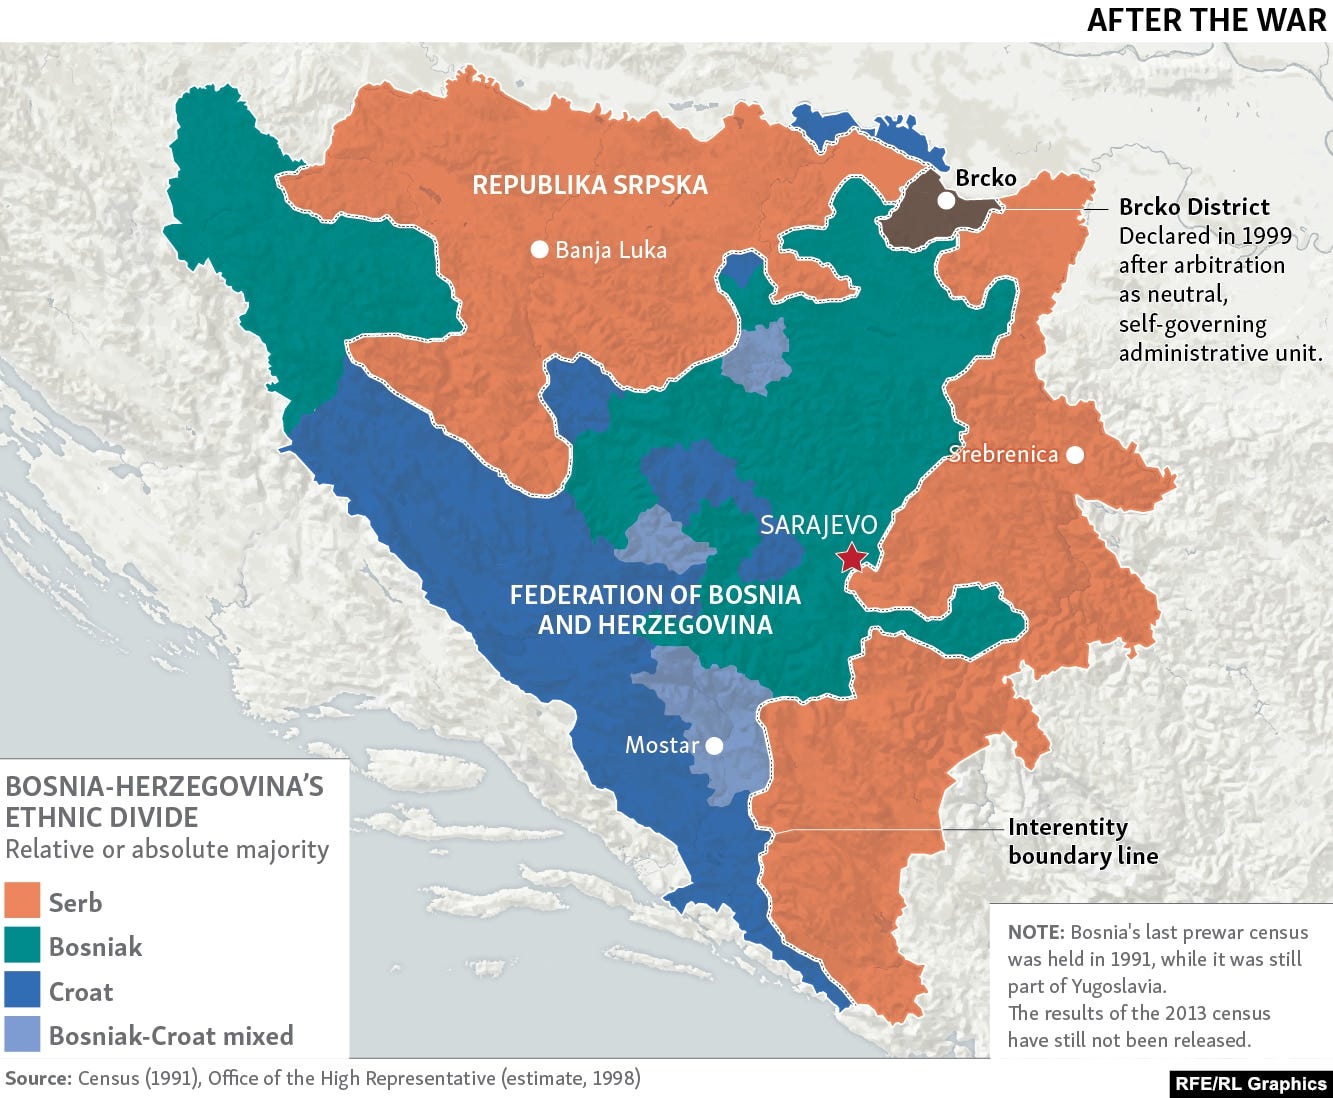 Map of the ethnic breakdown of Bosnia post-war - Serb, Croat and Bosniak